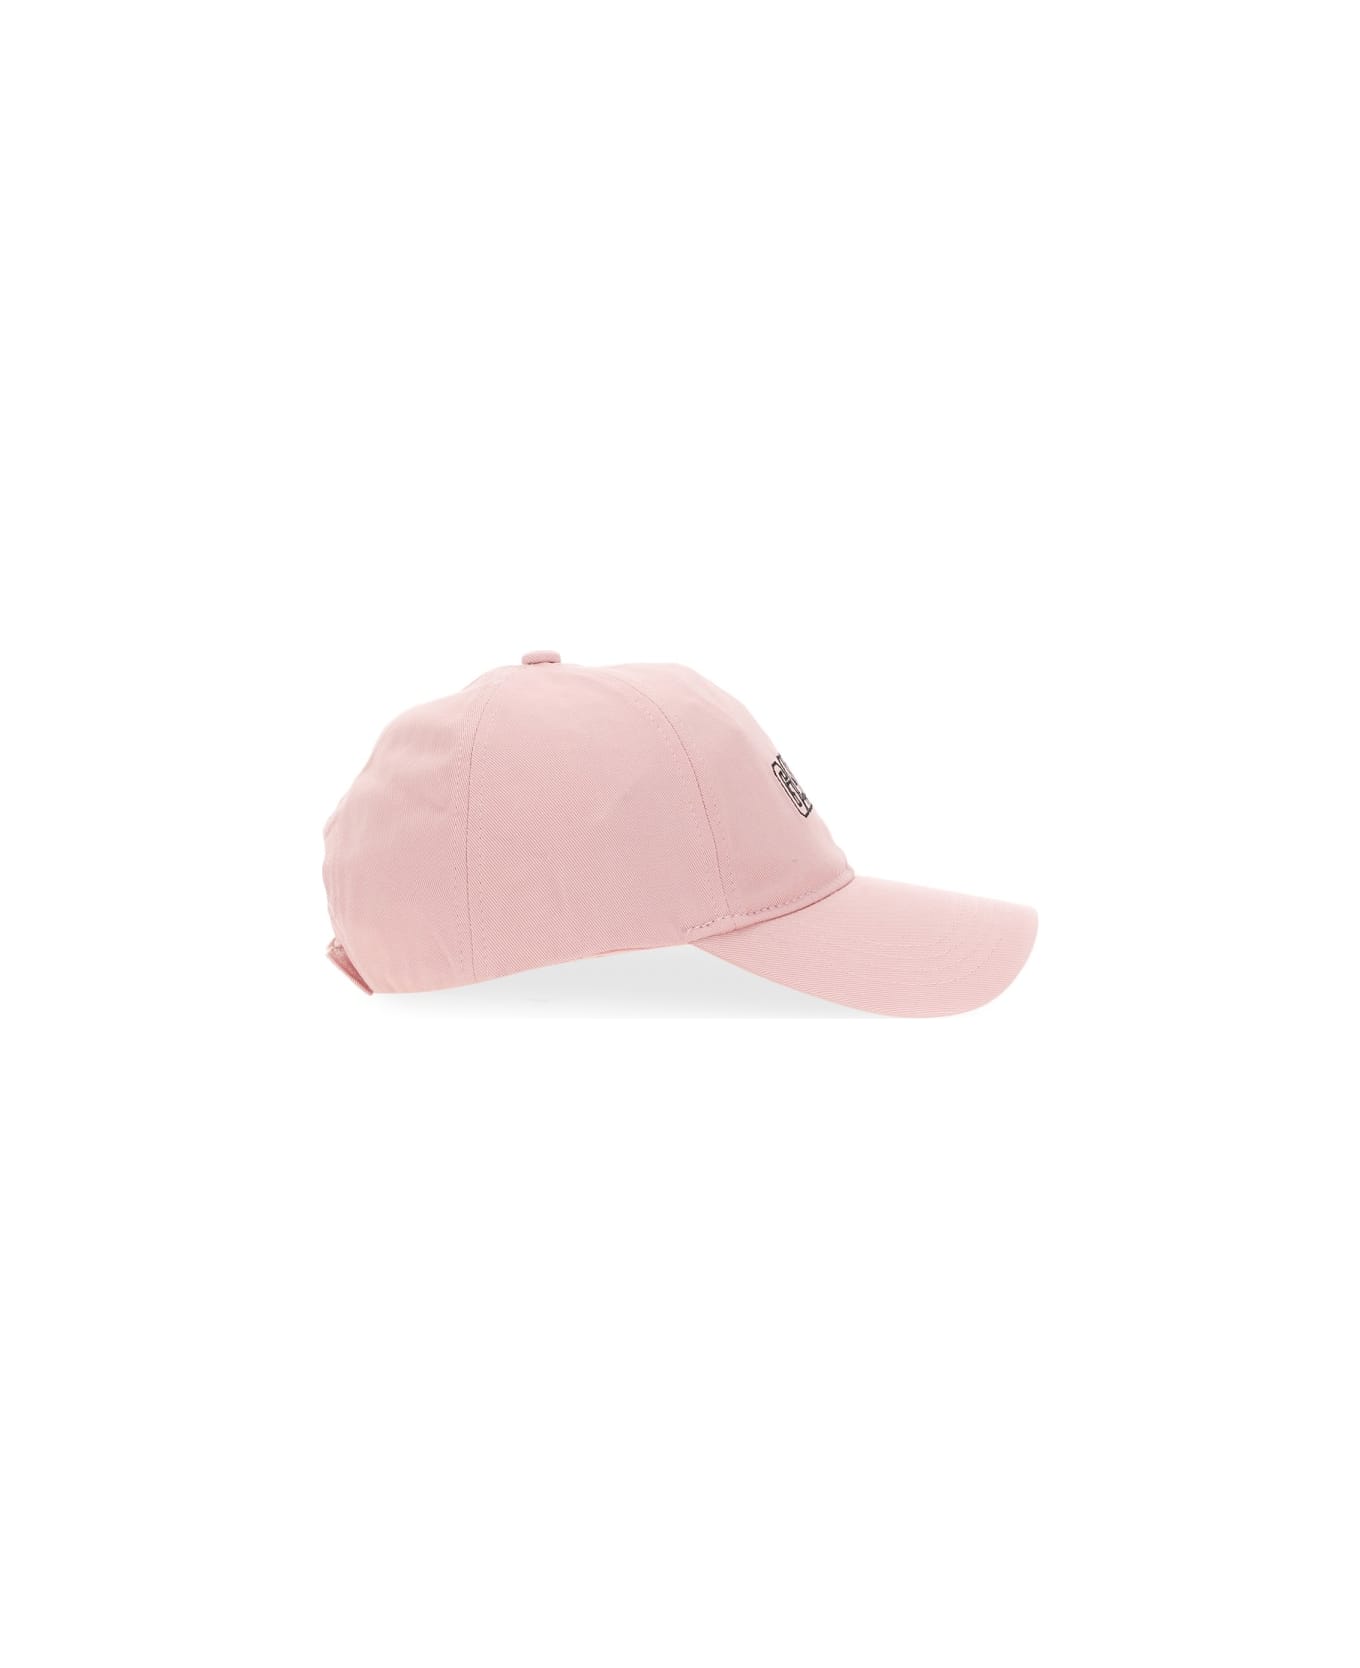 Ganni Baseball Hat With Logo - LILAC 帽子